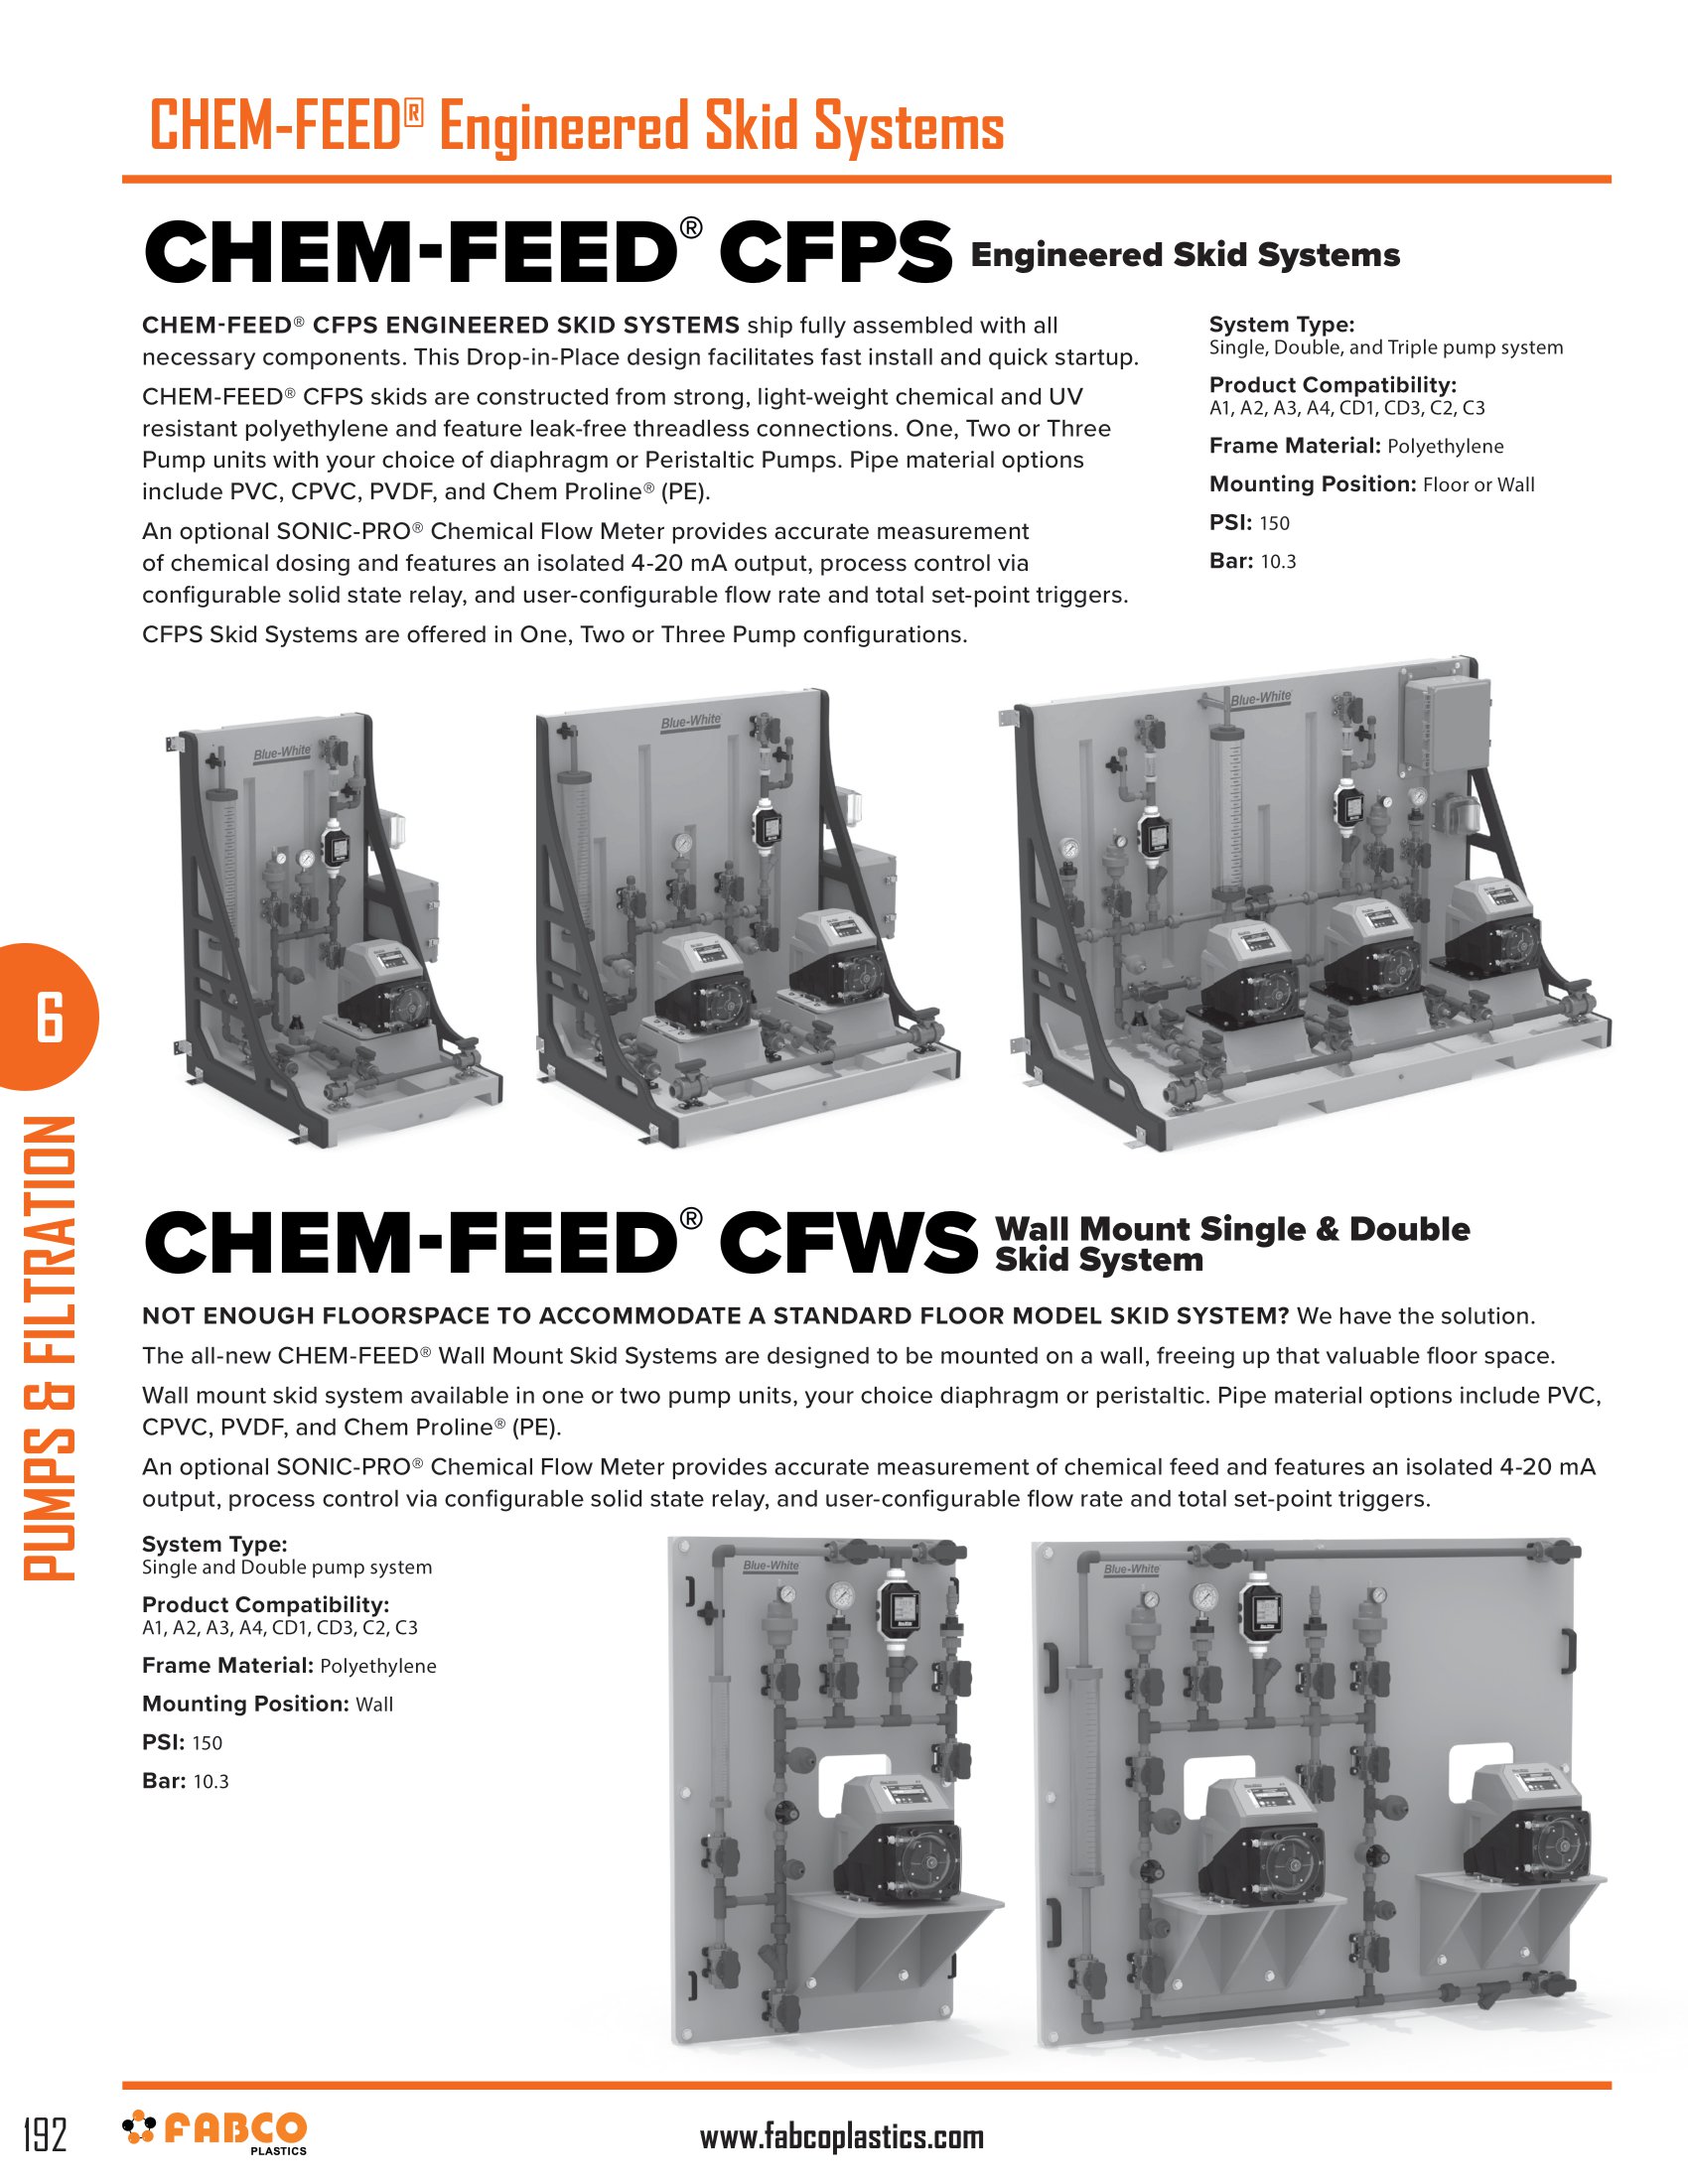 CHEM-FEED Engineered Skid Systems